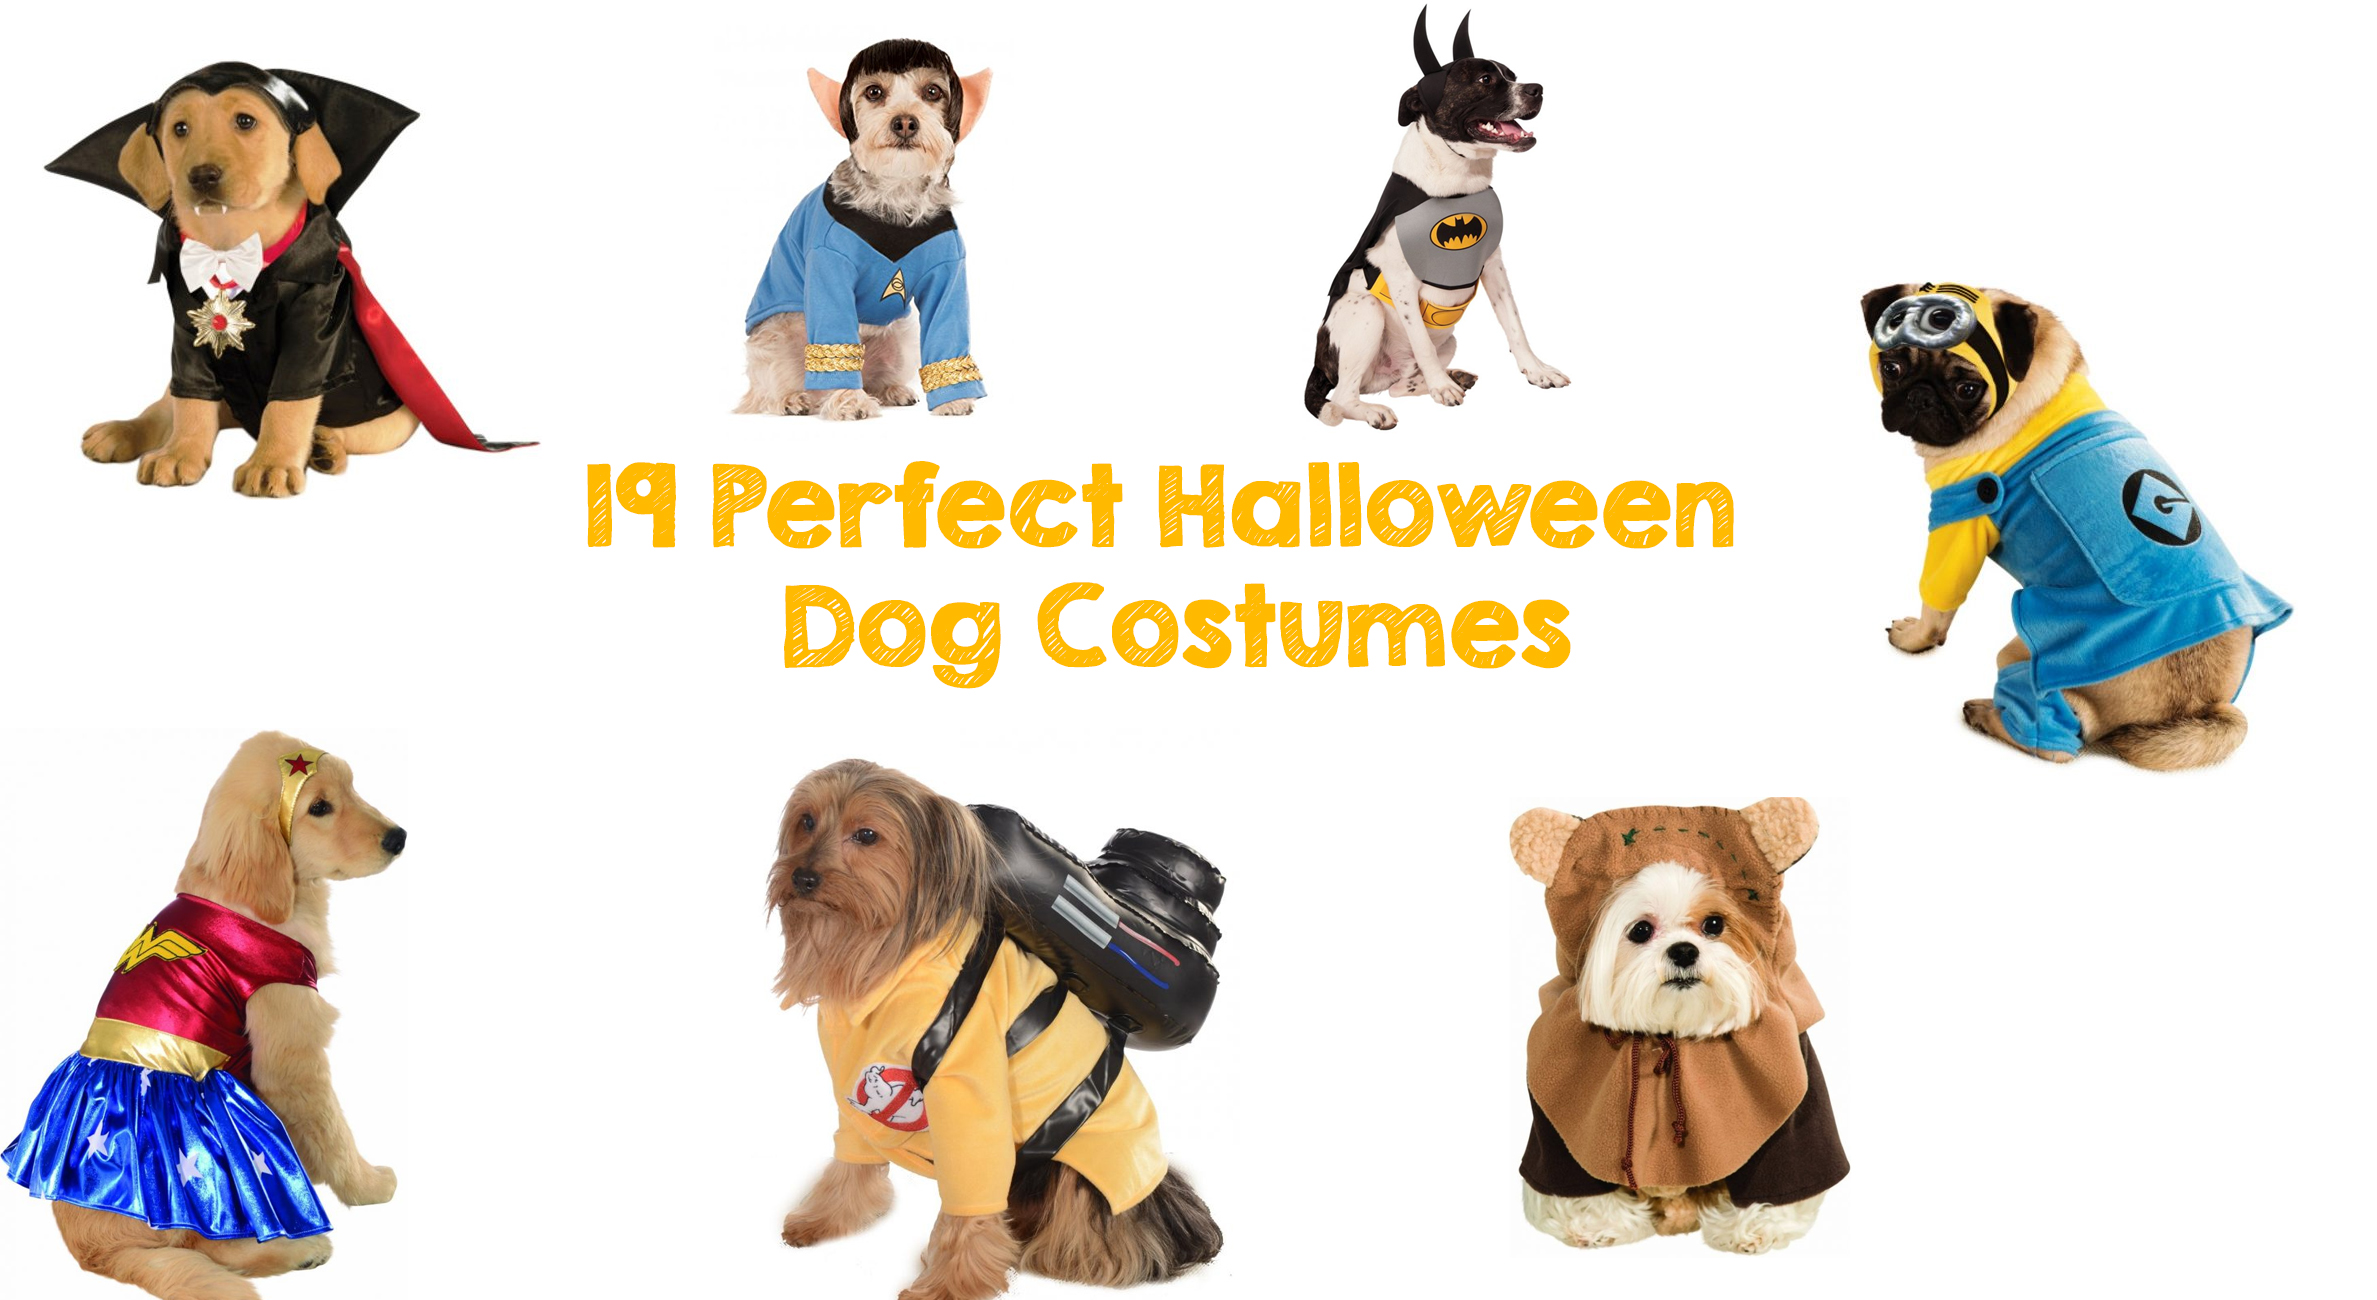 19 Perfect Halloween Dog Costumes